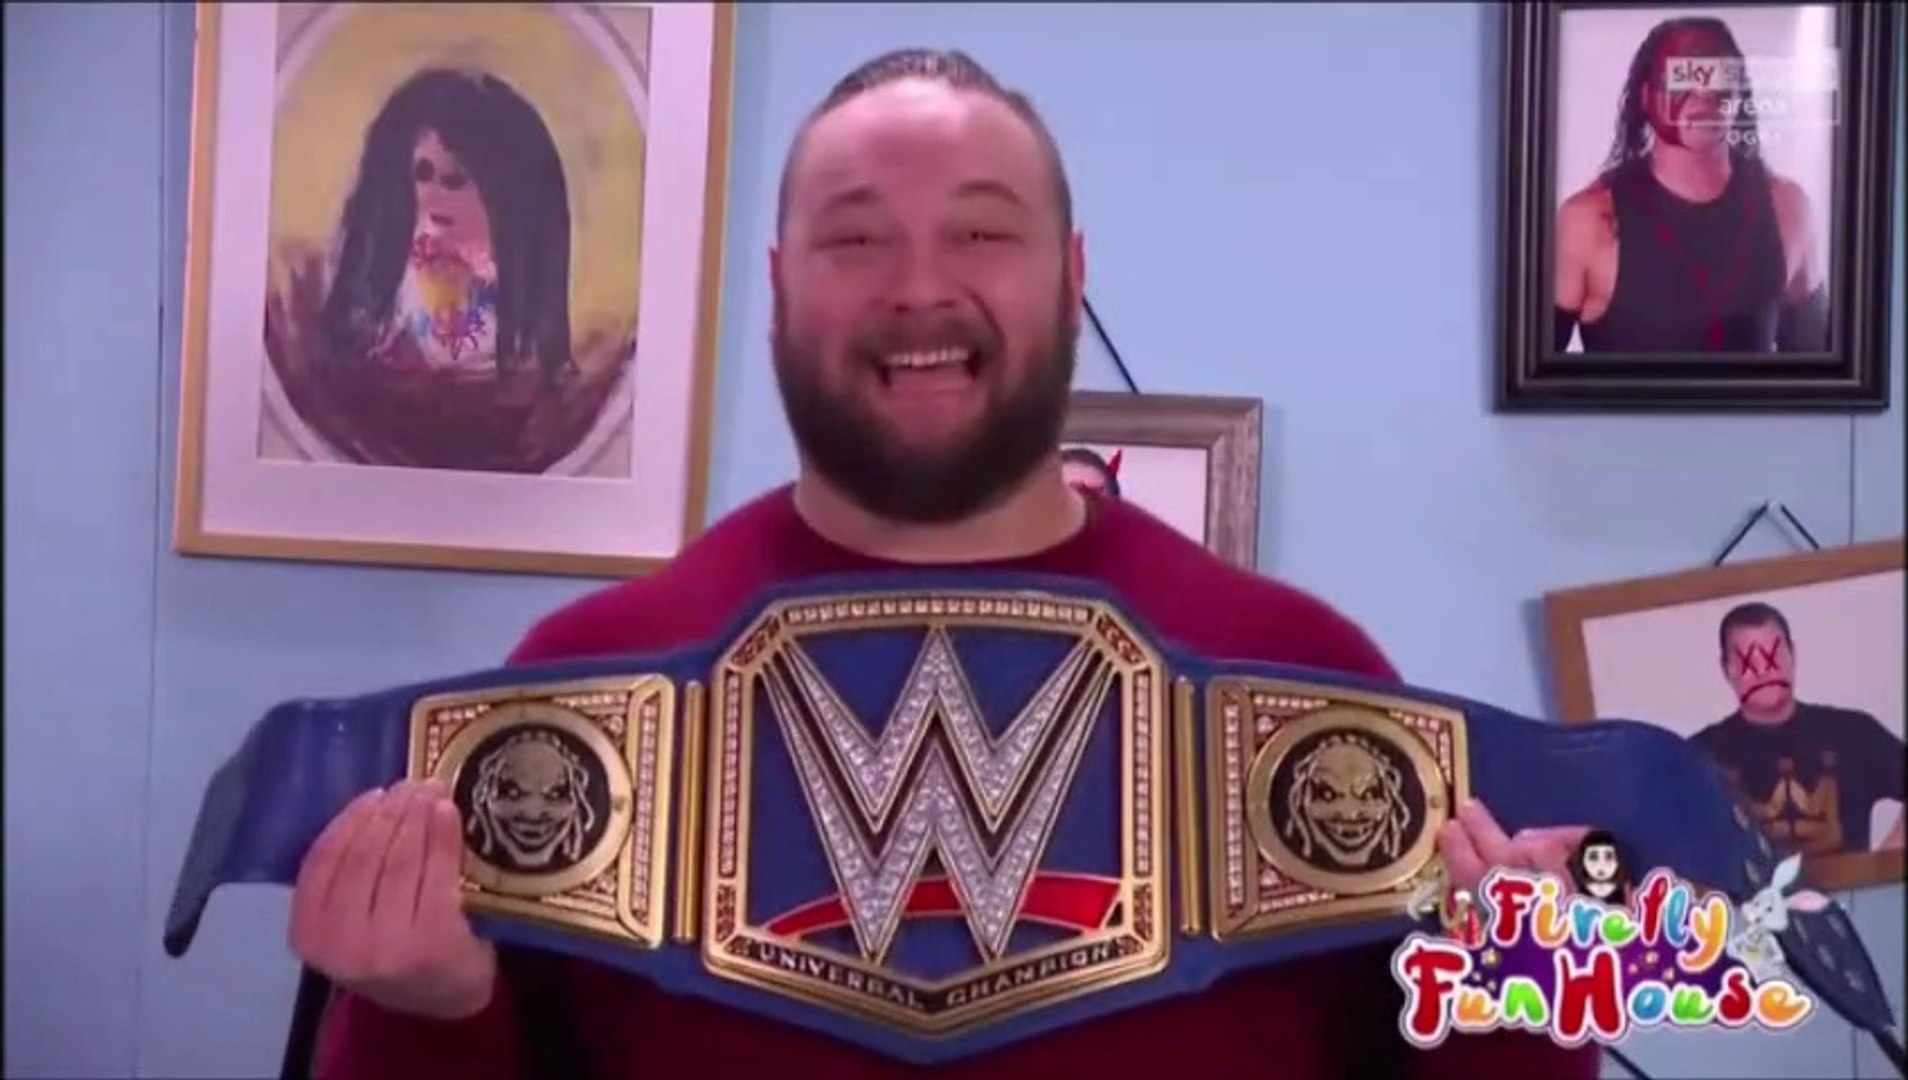 ITA) FIREFLY FUN HOUSE - Bray Wyatt e la nuova cintura di The Fiend - Video  Dailymotion